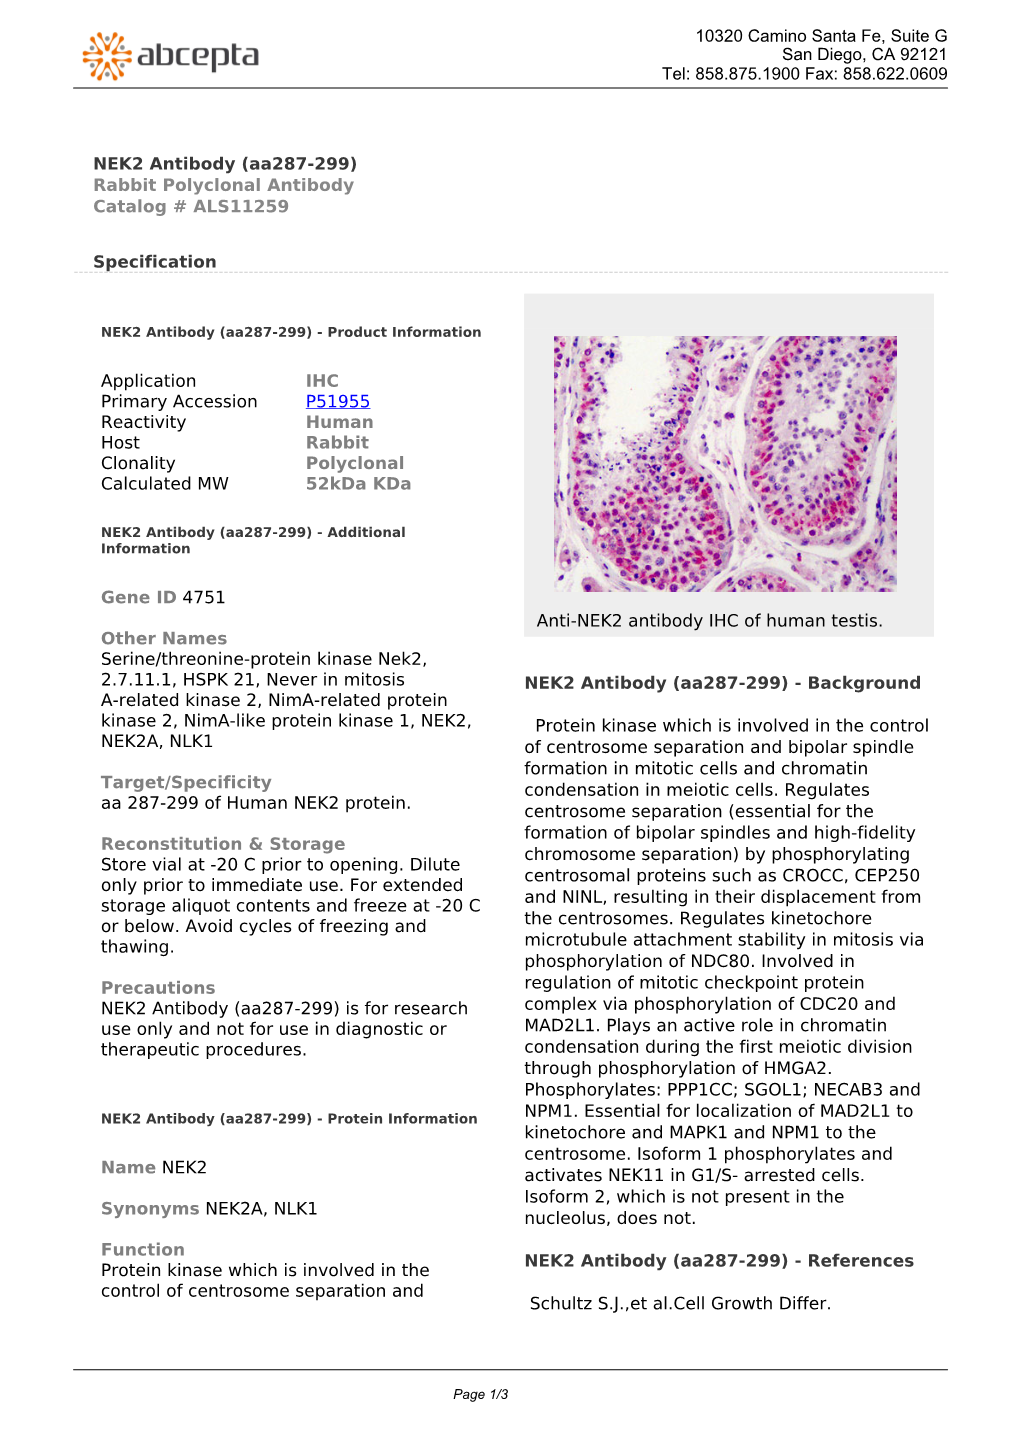 NEK2 Antibody (Aa287-299) Rabbit Polyclonal Antibody Catalog # ALS11259